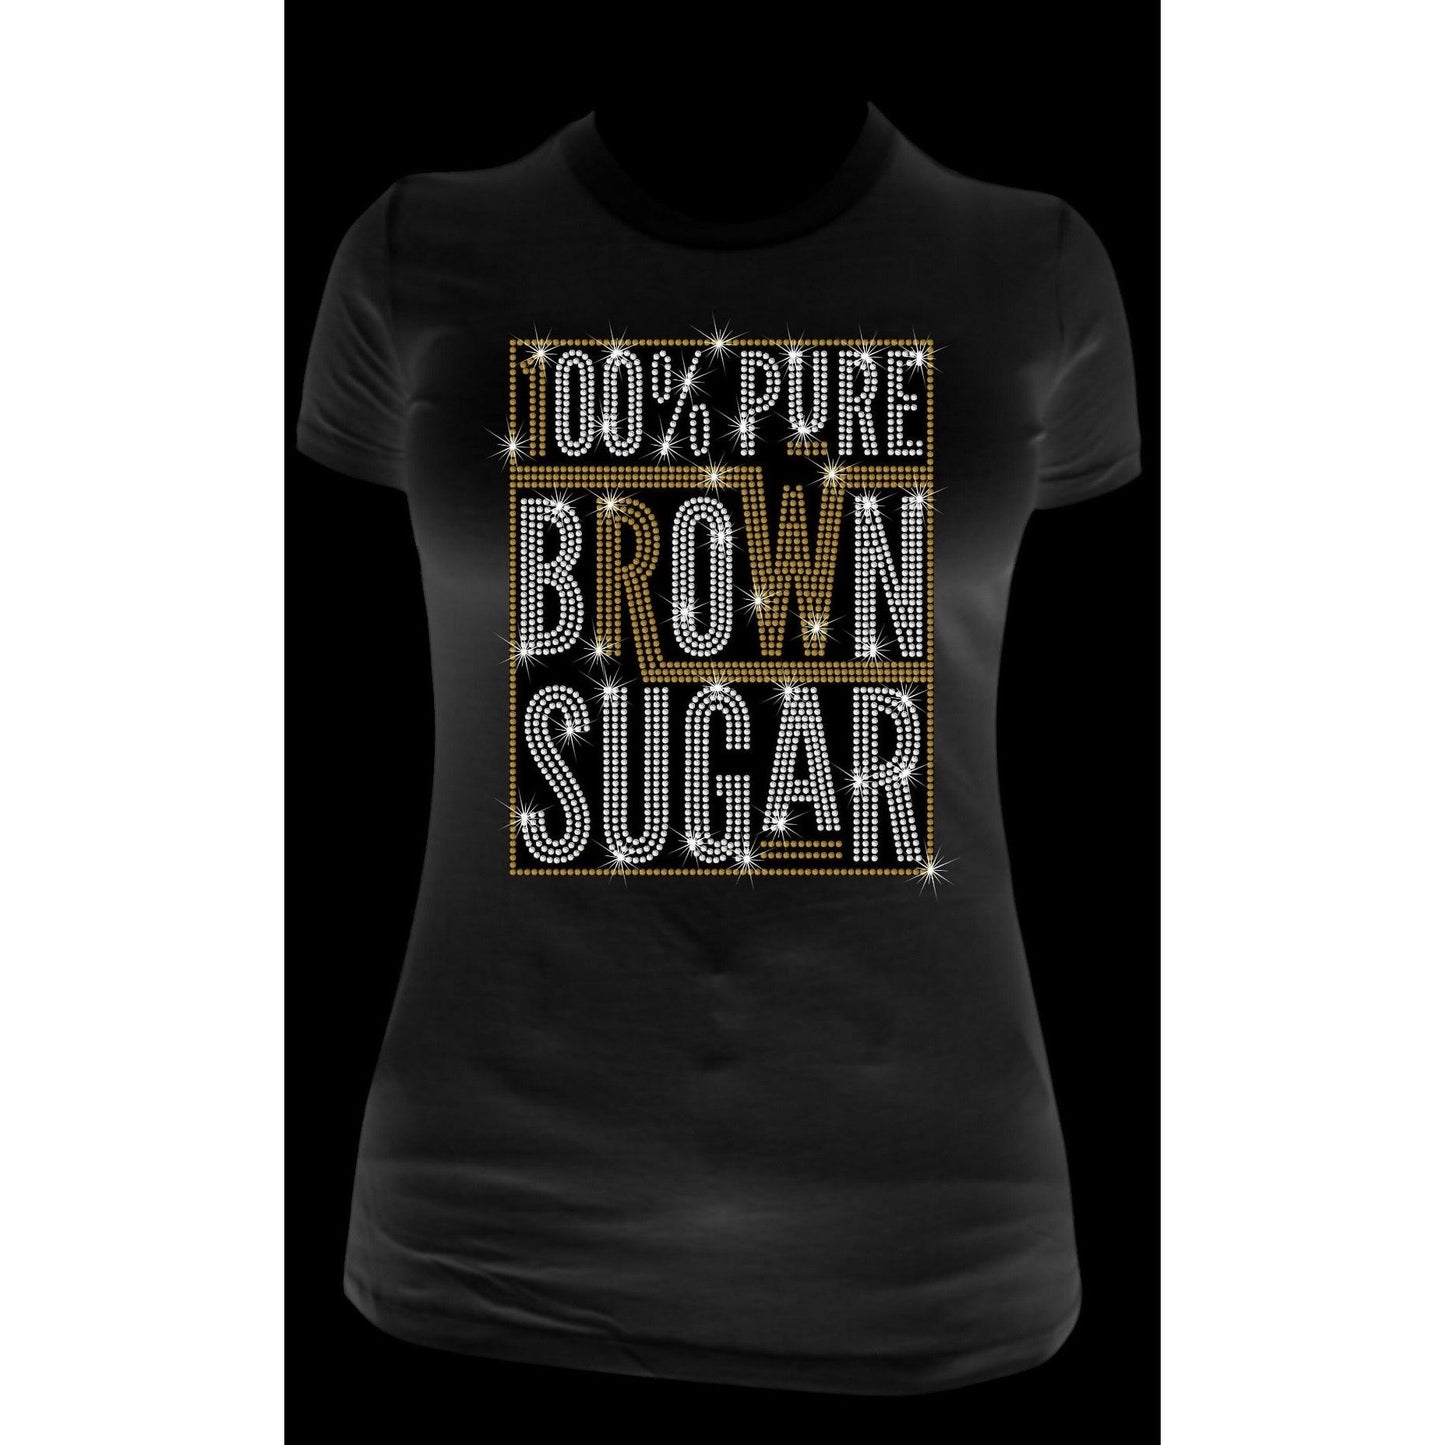 100% Pure Brown Sugar Rhinestone Shirt